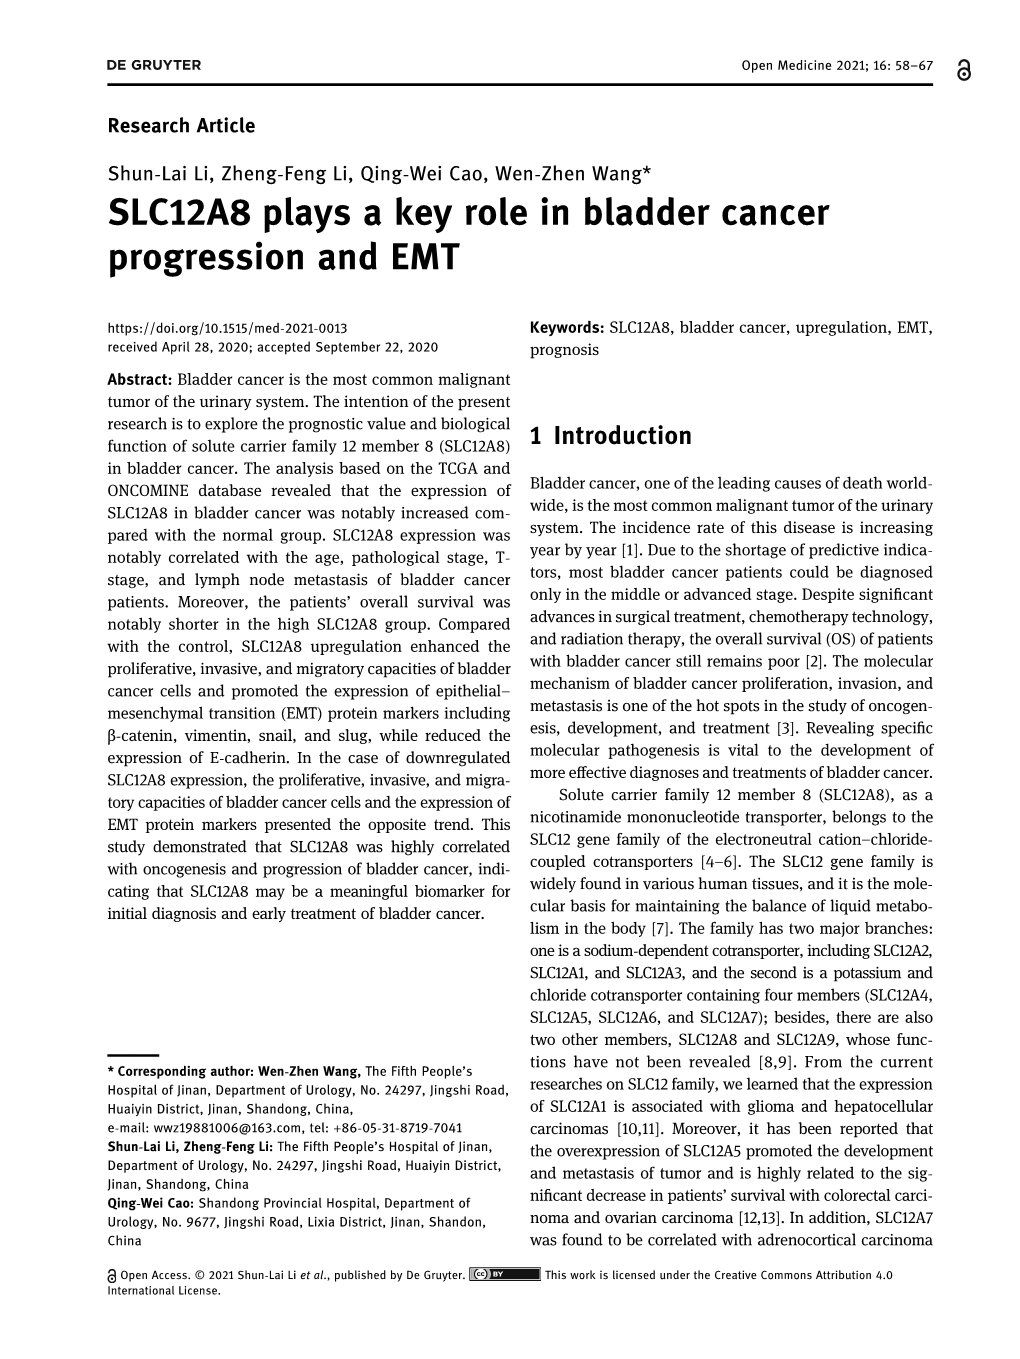 SLC12A8 Plays a Key Role in Bladder Cancer Progression and EMT